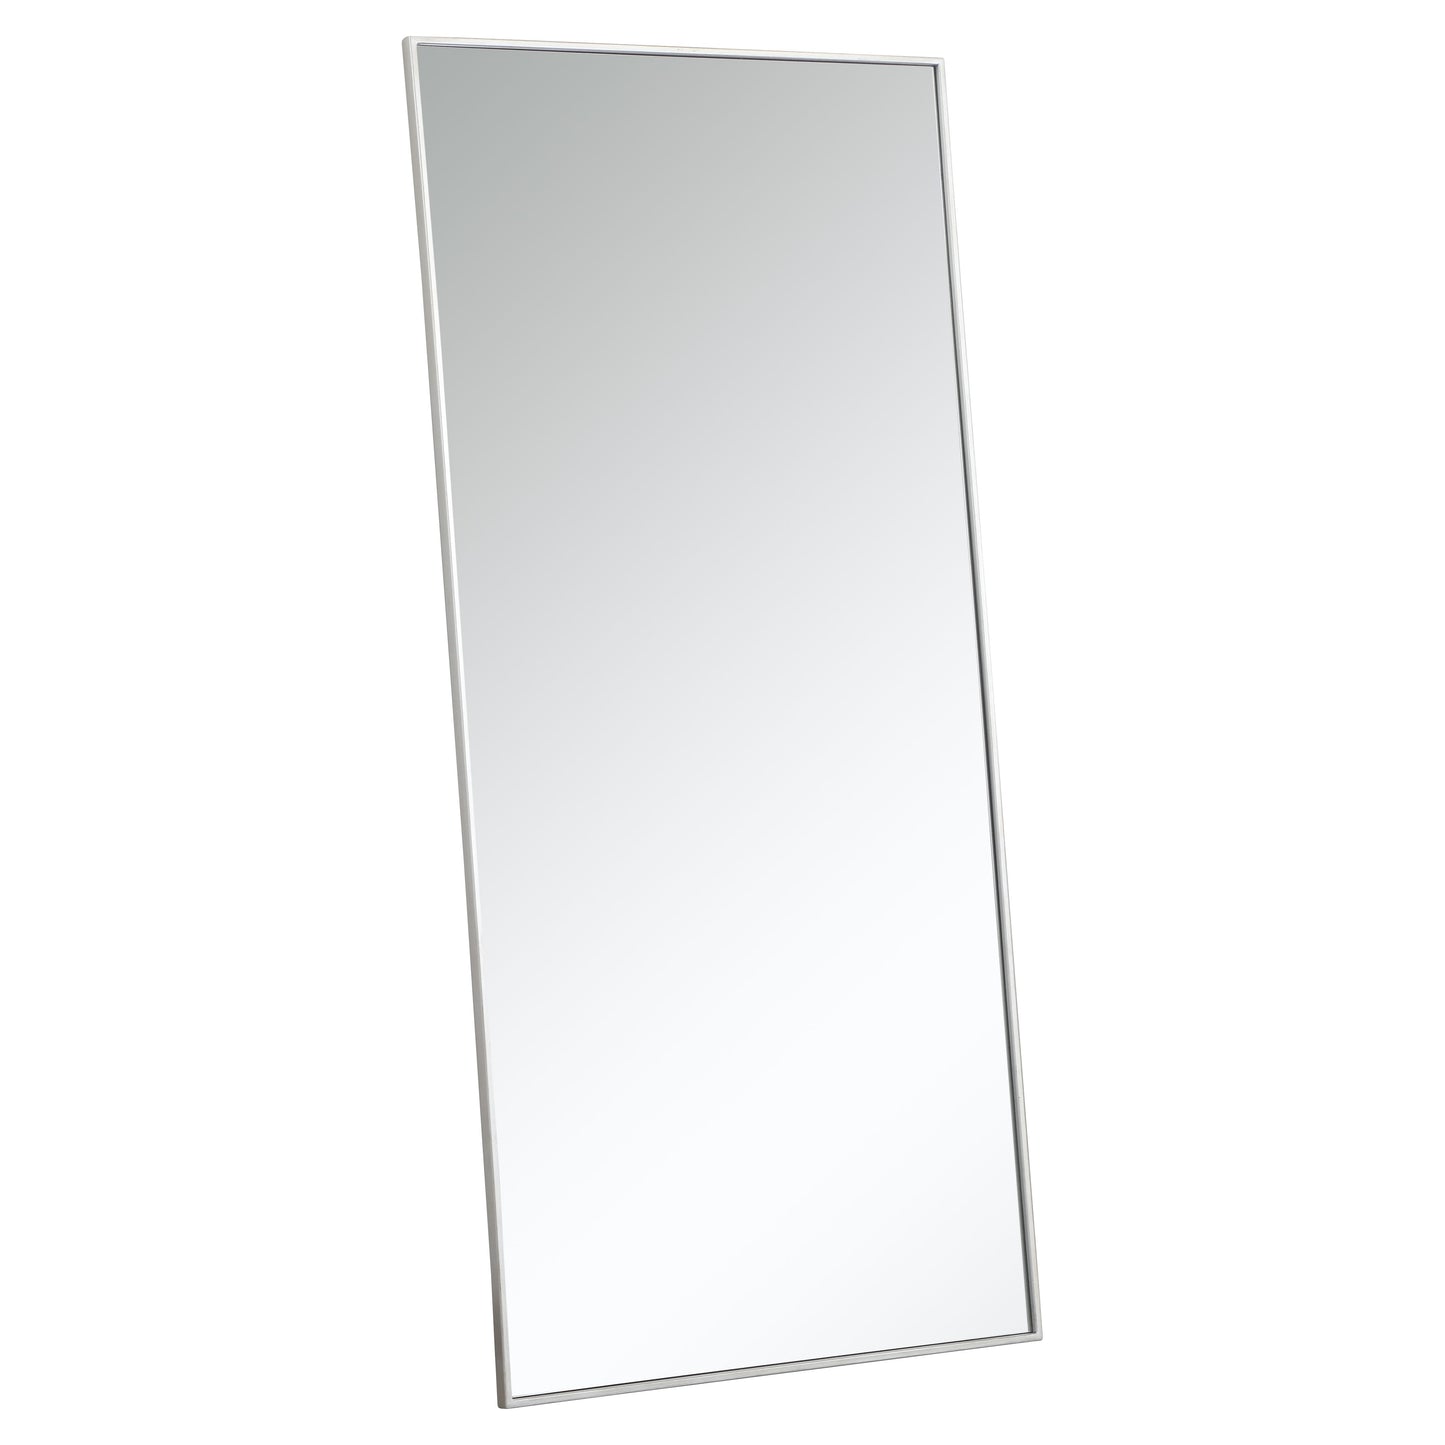 MR43060S Monet 30" x 60" Metal Framed Rectangular Mirror in Silver